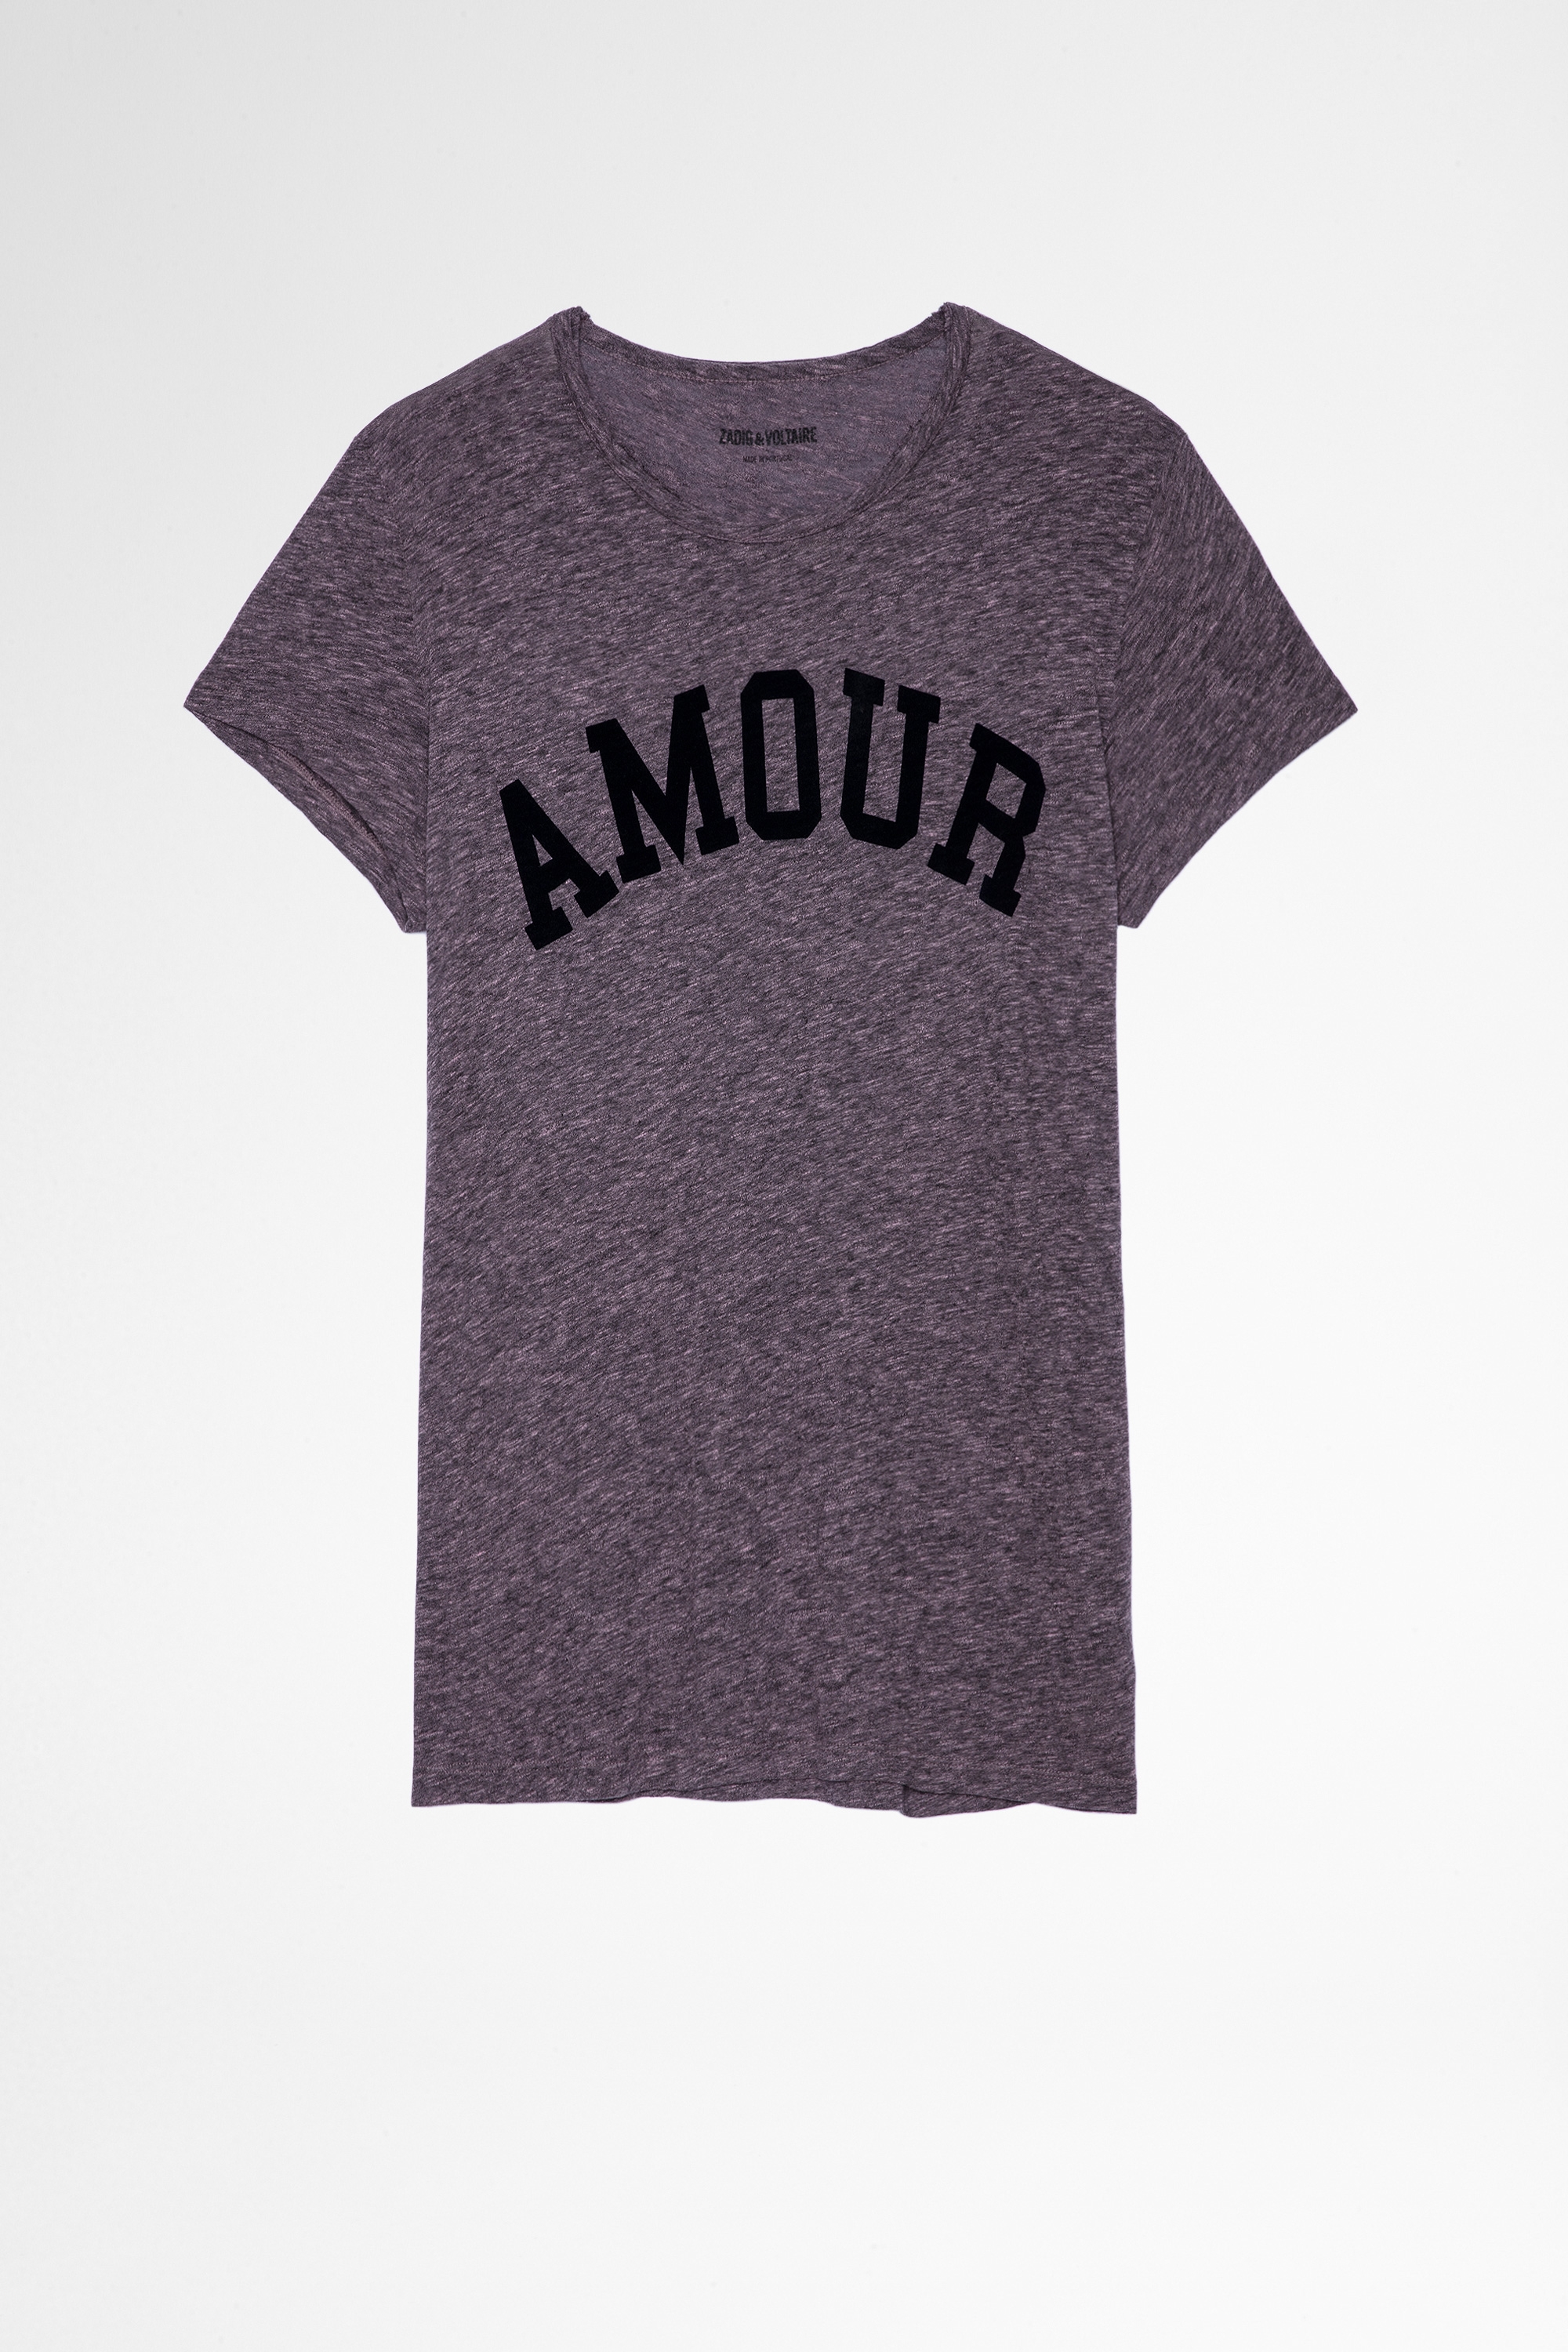 Walk Amour T-shirt